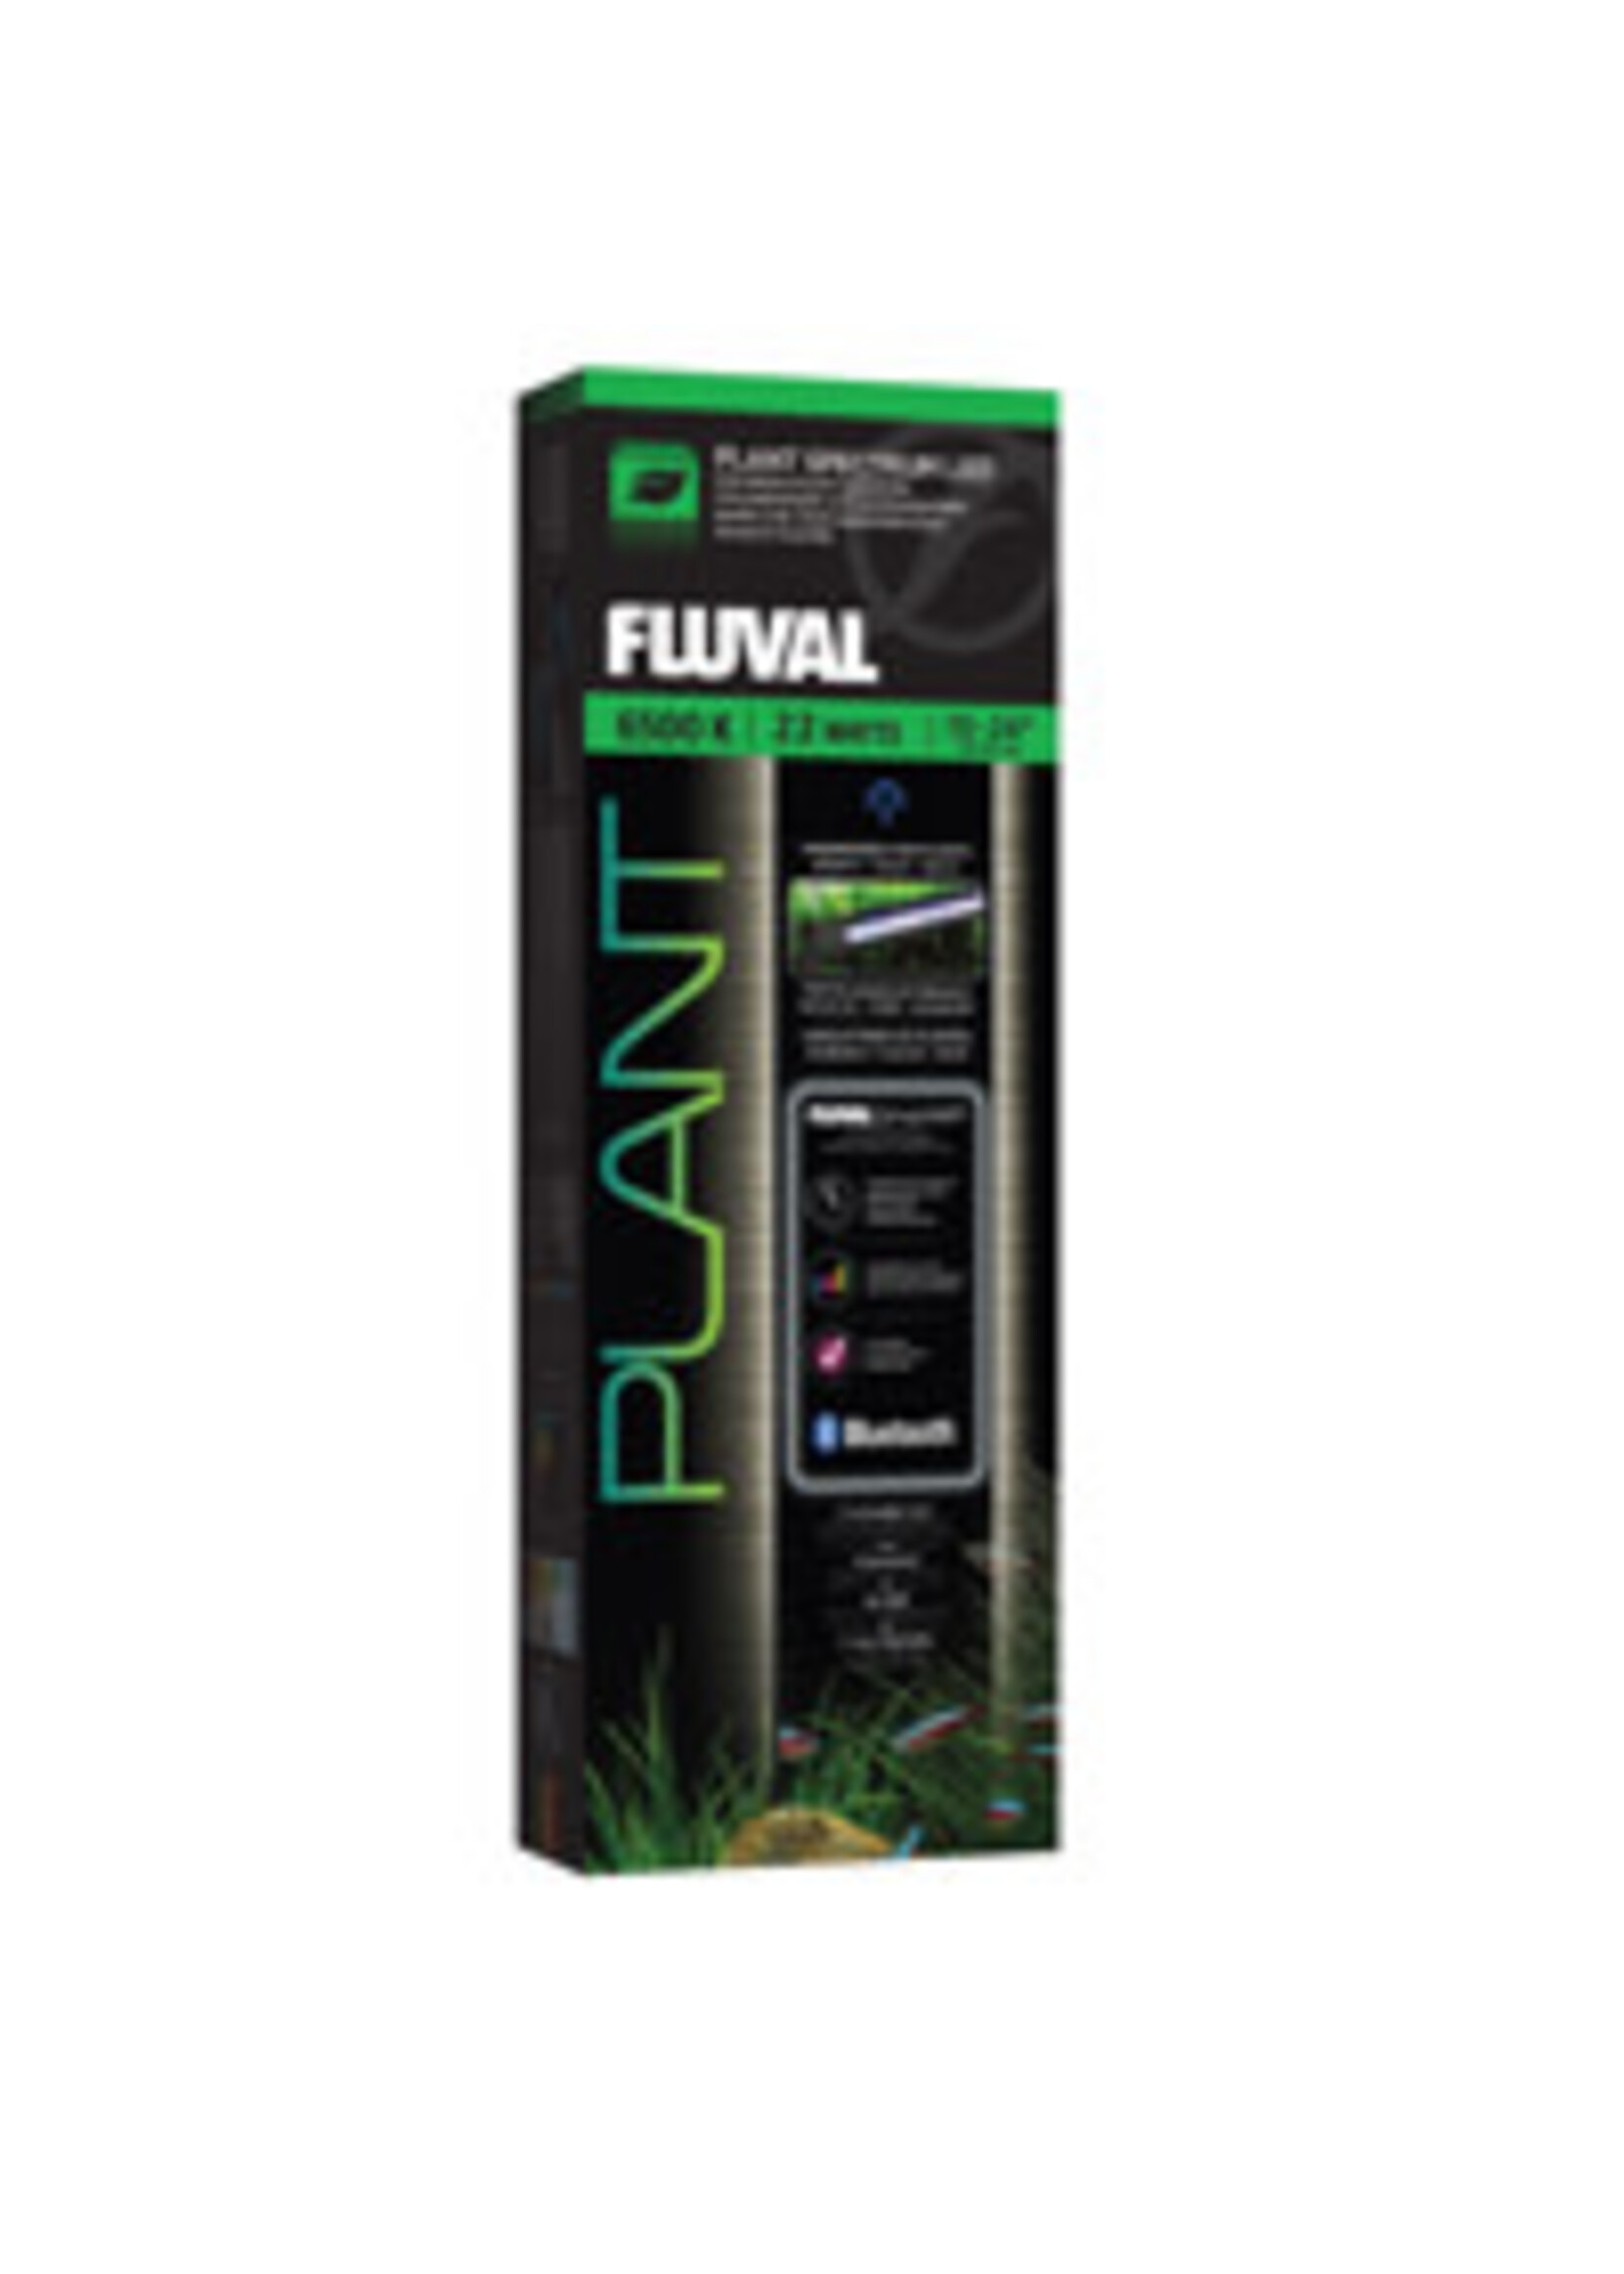 Fluval Fluval Plant Spectrum LED w/Bluetooth